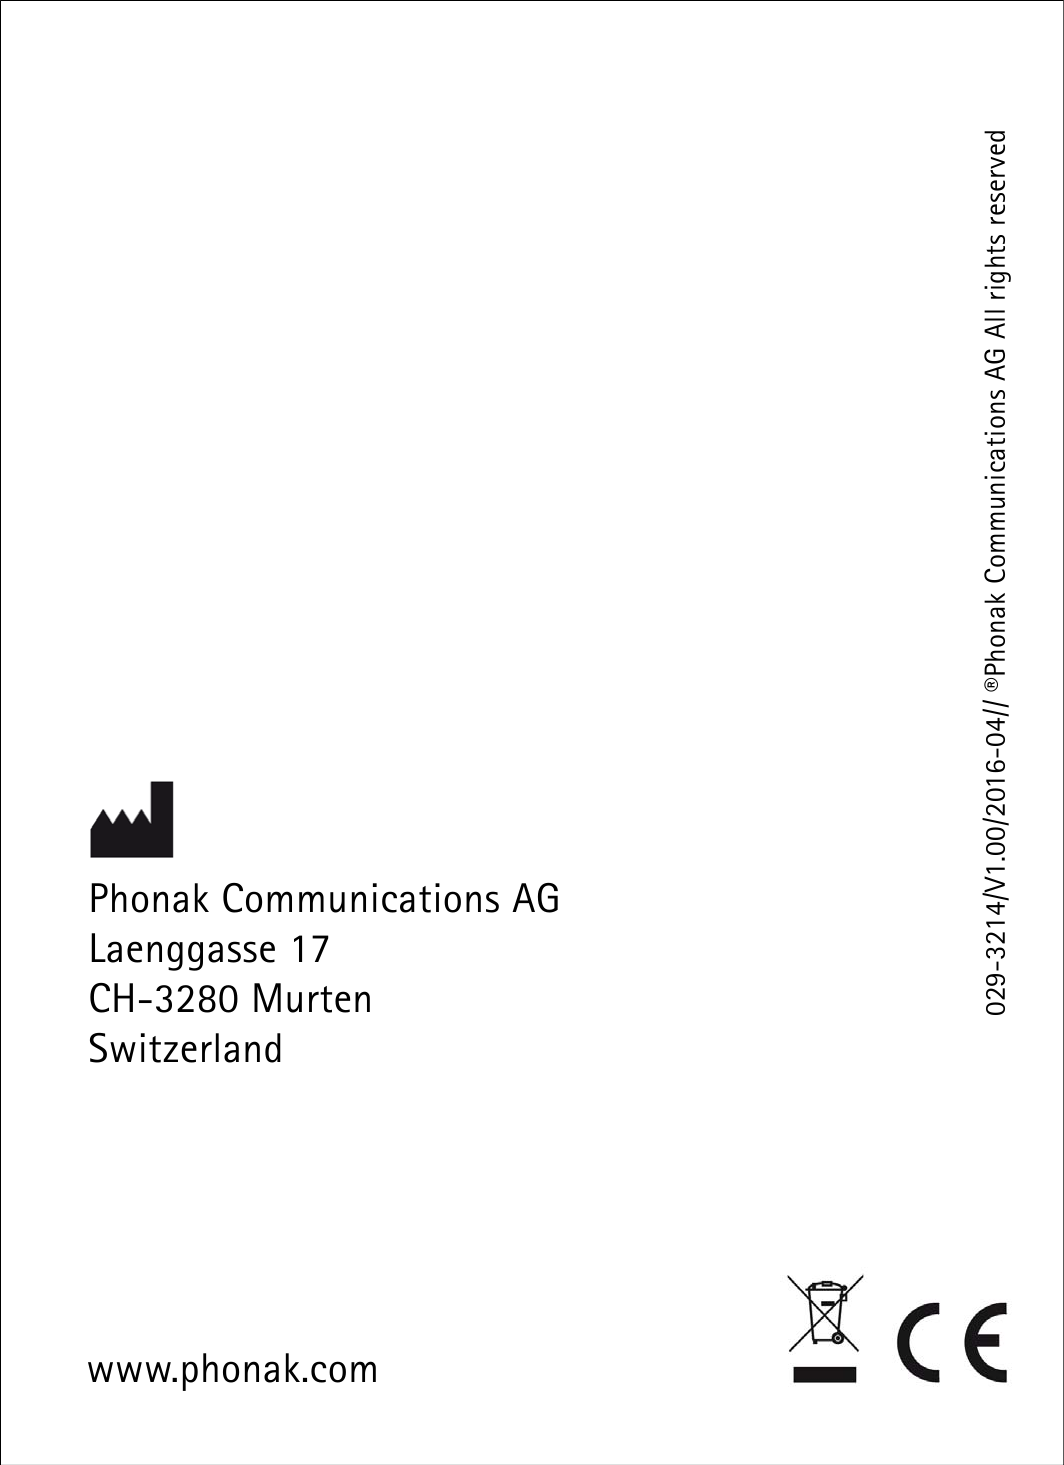 Phonak Communications AGLaenggasse 17CH-3280 MurtenSwitzerland029-3214/V1.00/2016-04// ®Phonak Communications AG All rights reservedwww.phonak.com